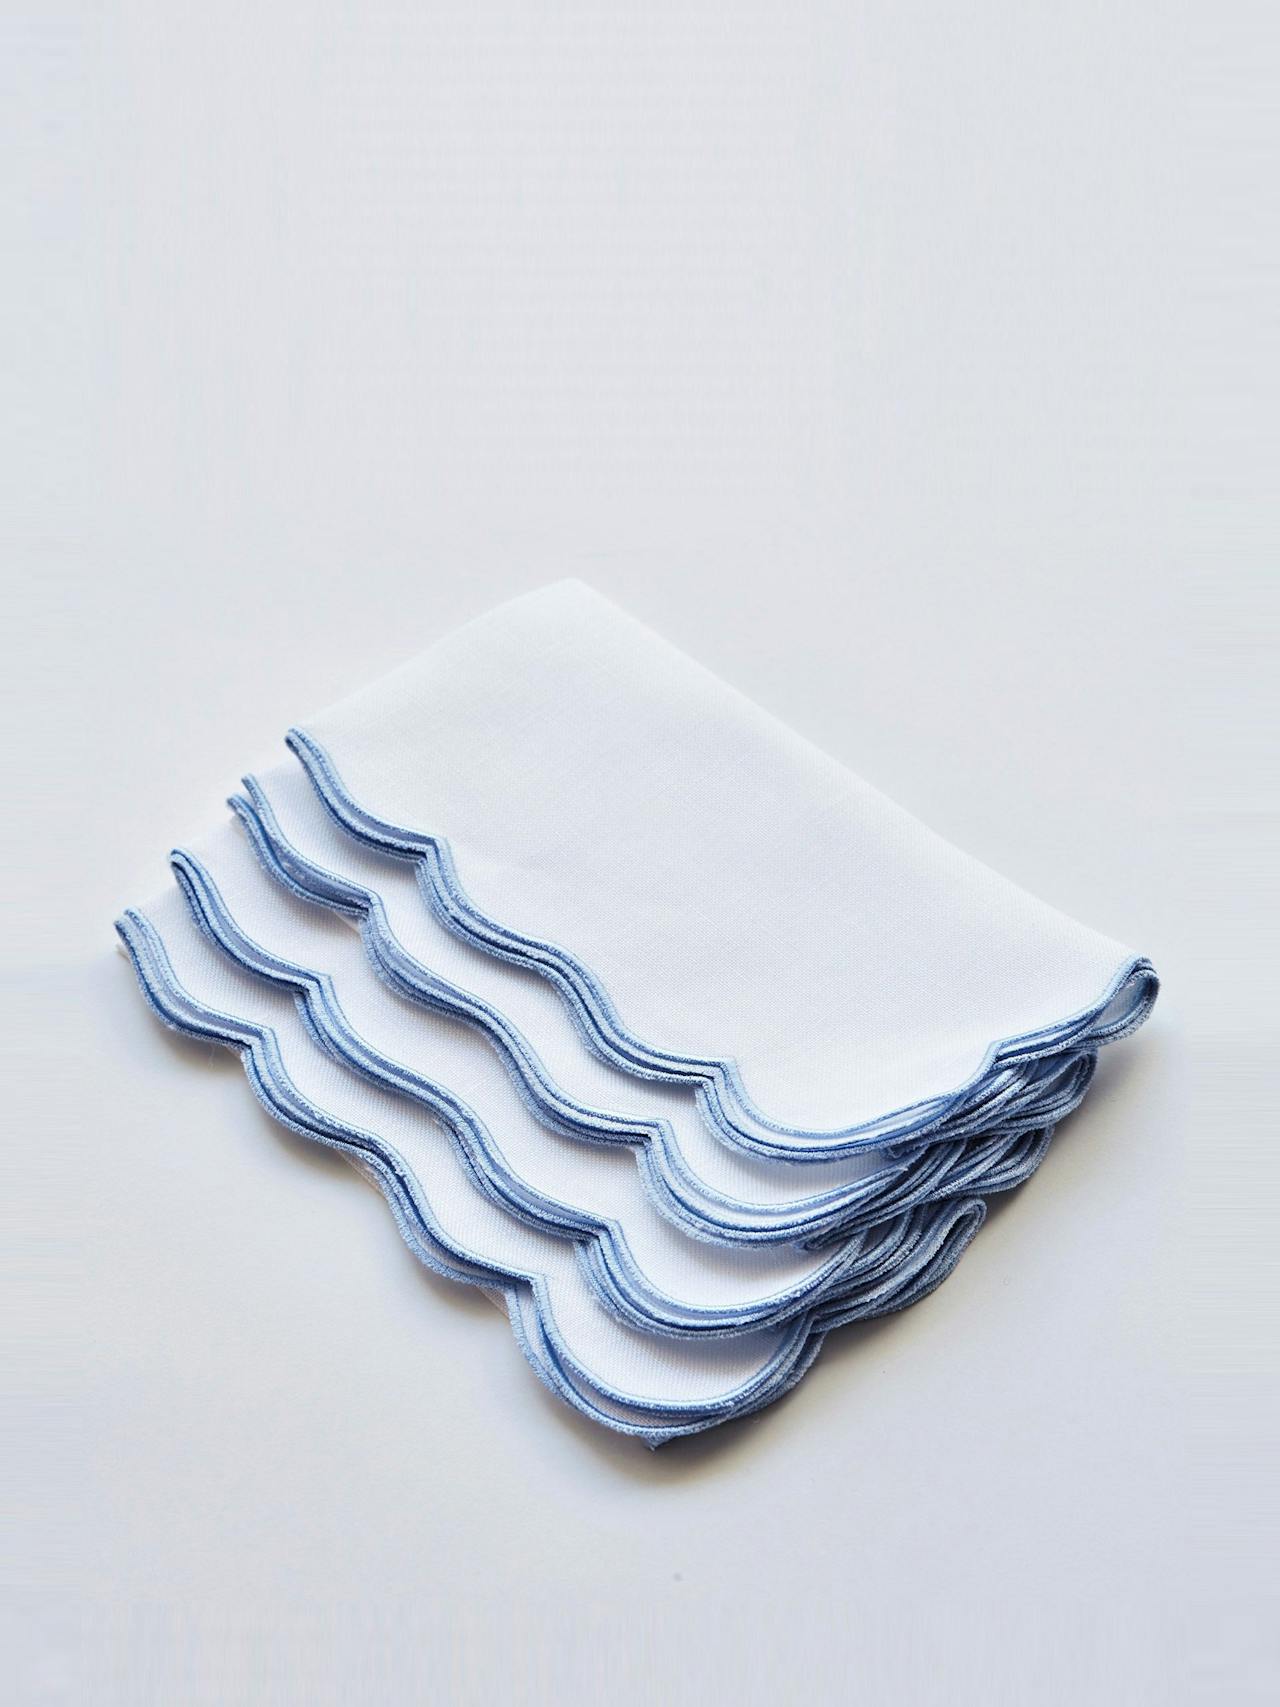 Embroidered light blue scallop napkins, set of 4